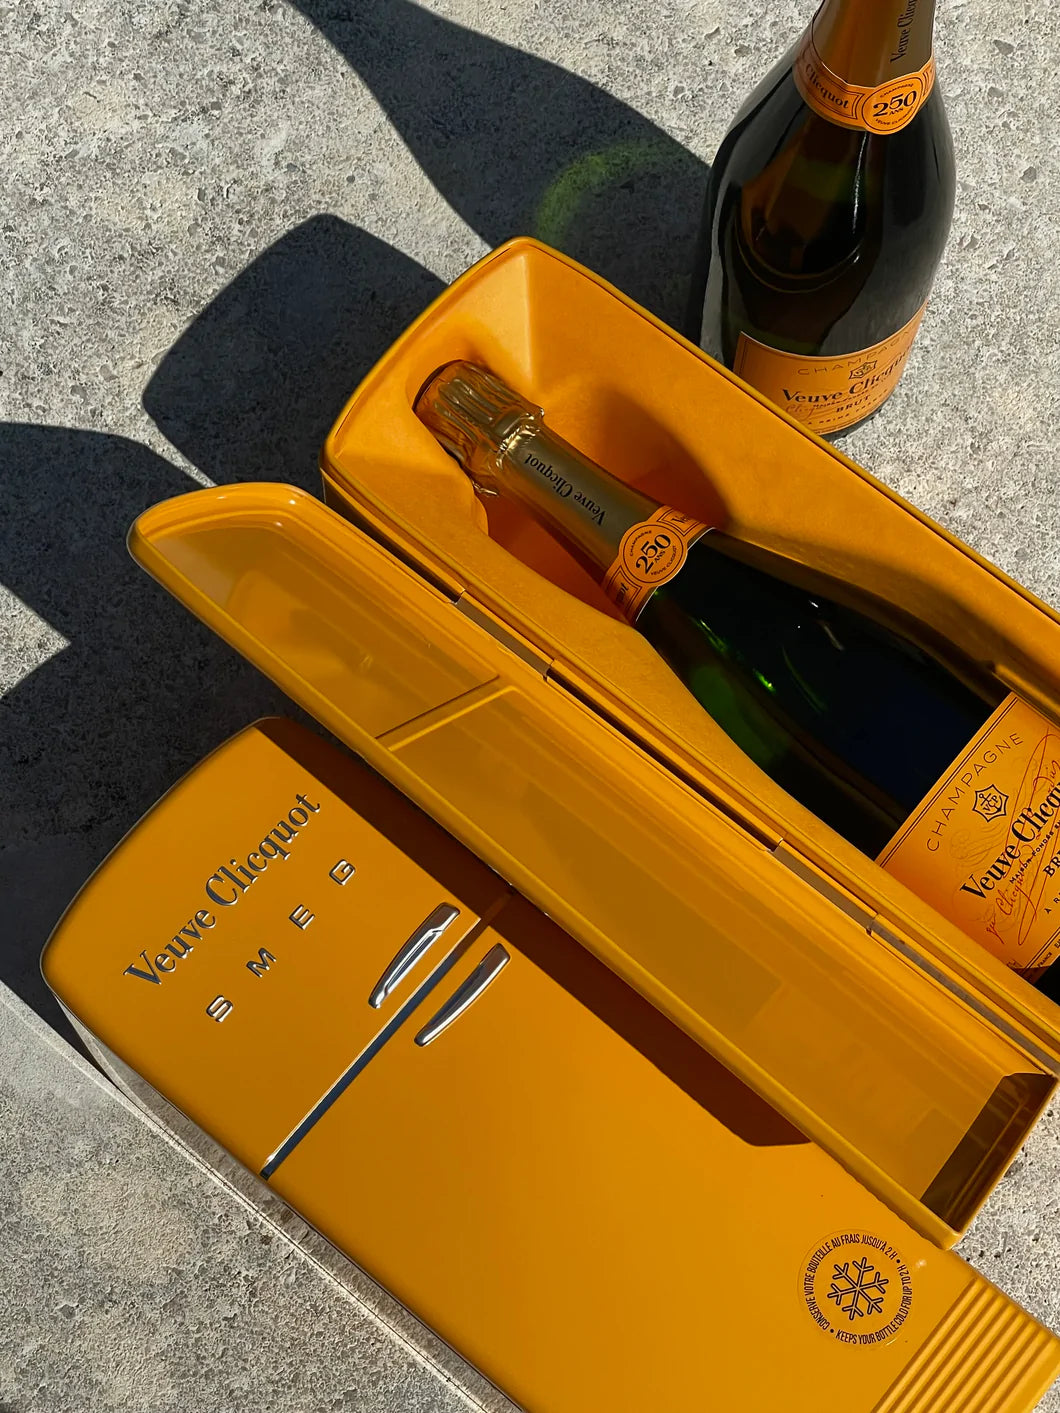 NV Veuve Clicquot Refrigerator Gift Box 750mL - Wally's Wine & Spirits